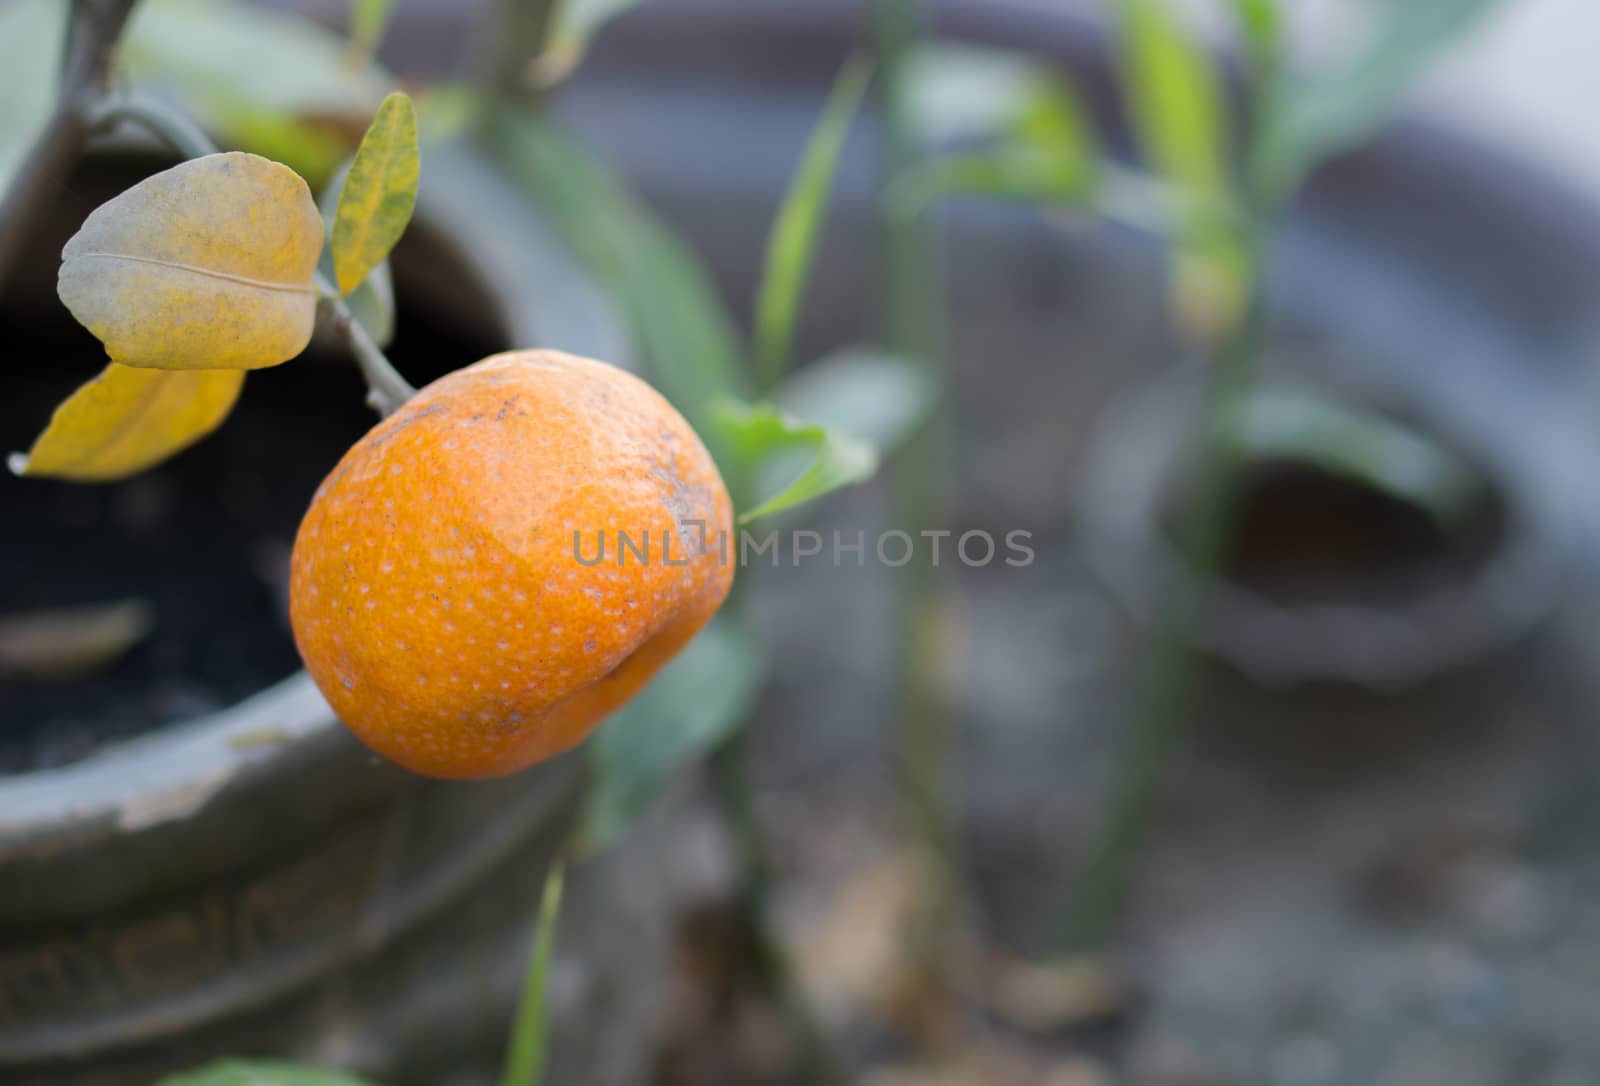 COLOR PHOTO OF RIPE SMALL SINGLE ORANGE FRUIT